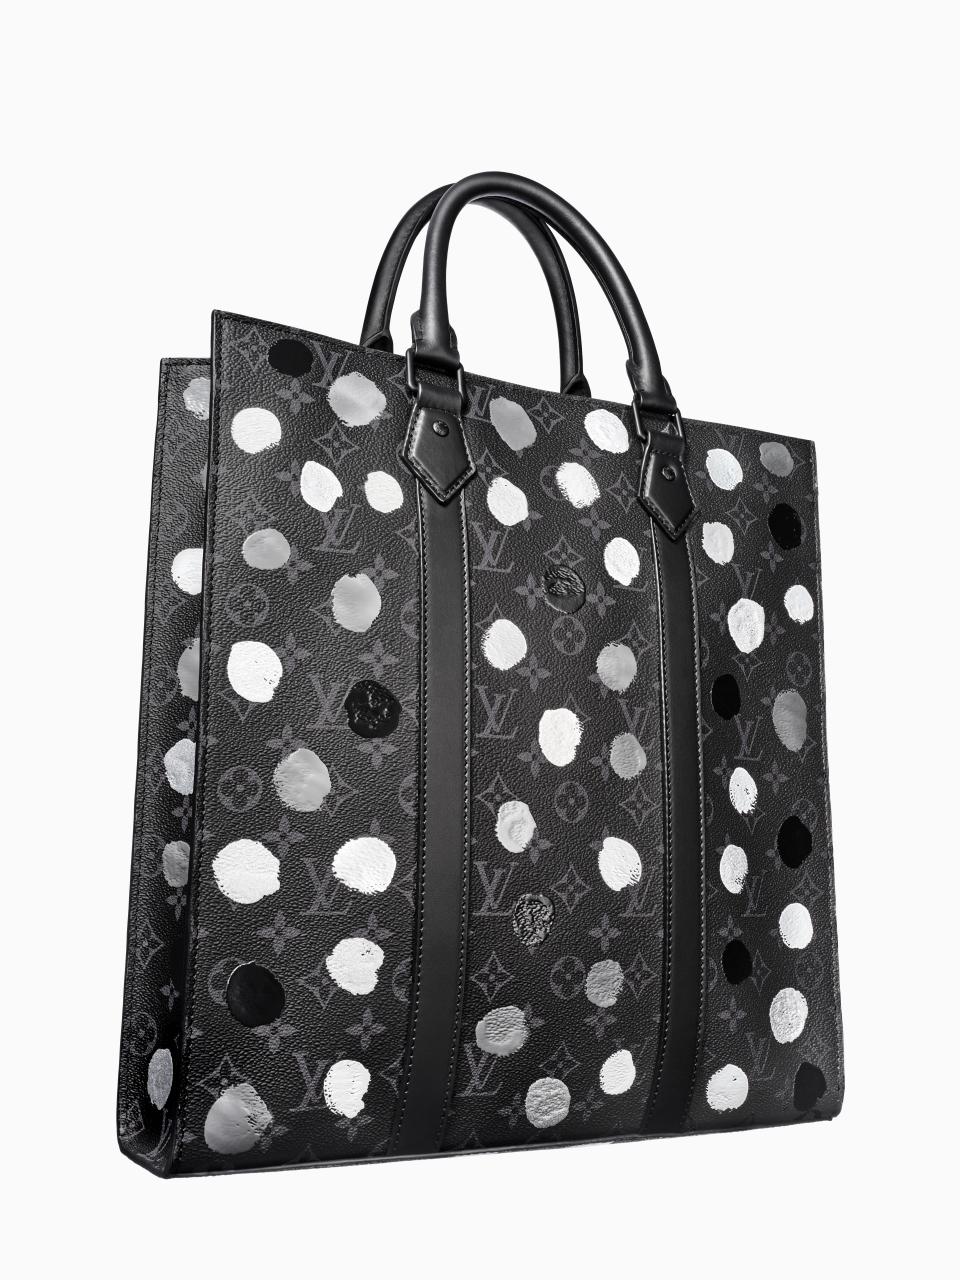 Louis Vuitton x Yayoi Kusama Sac Plat 24H in polka dotted prints. (PHOTO: Louis Vuitton)